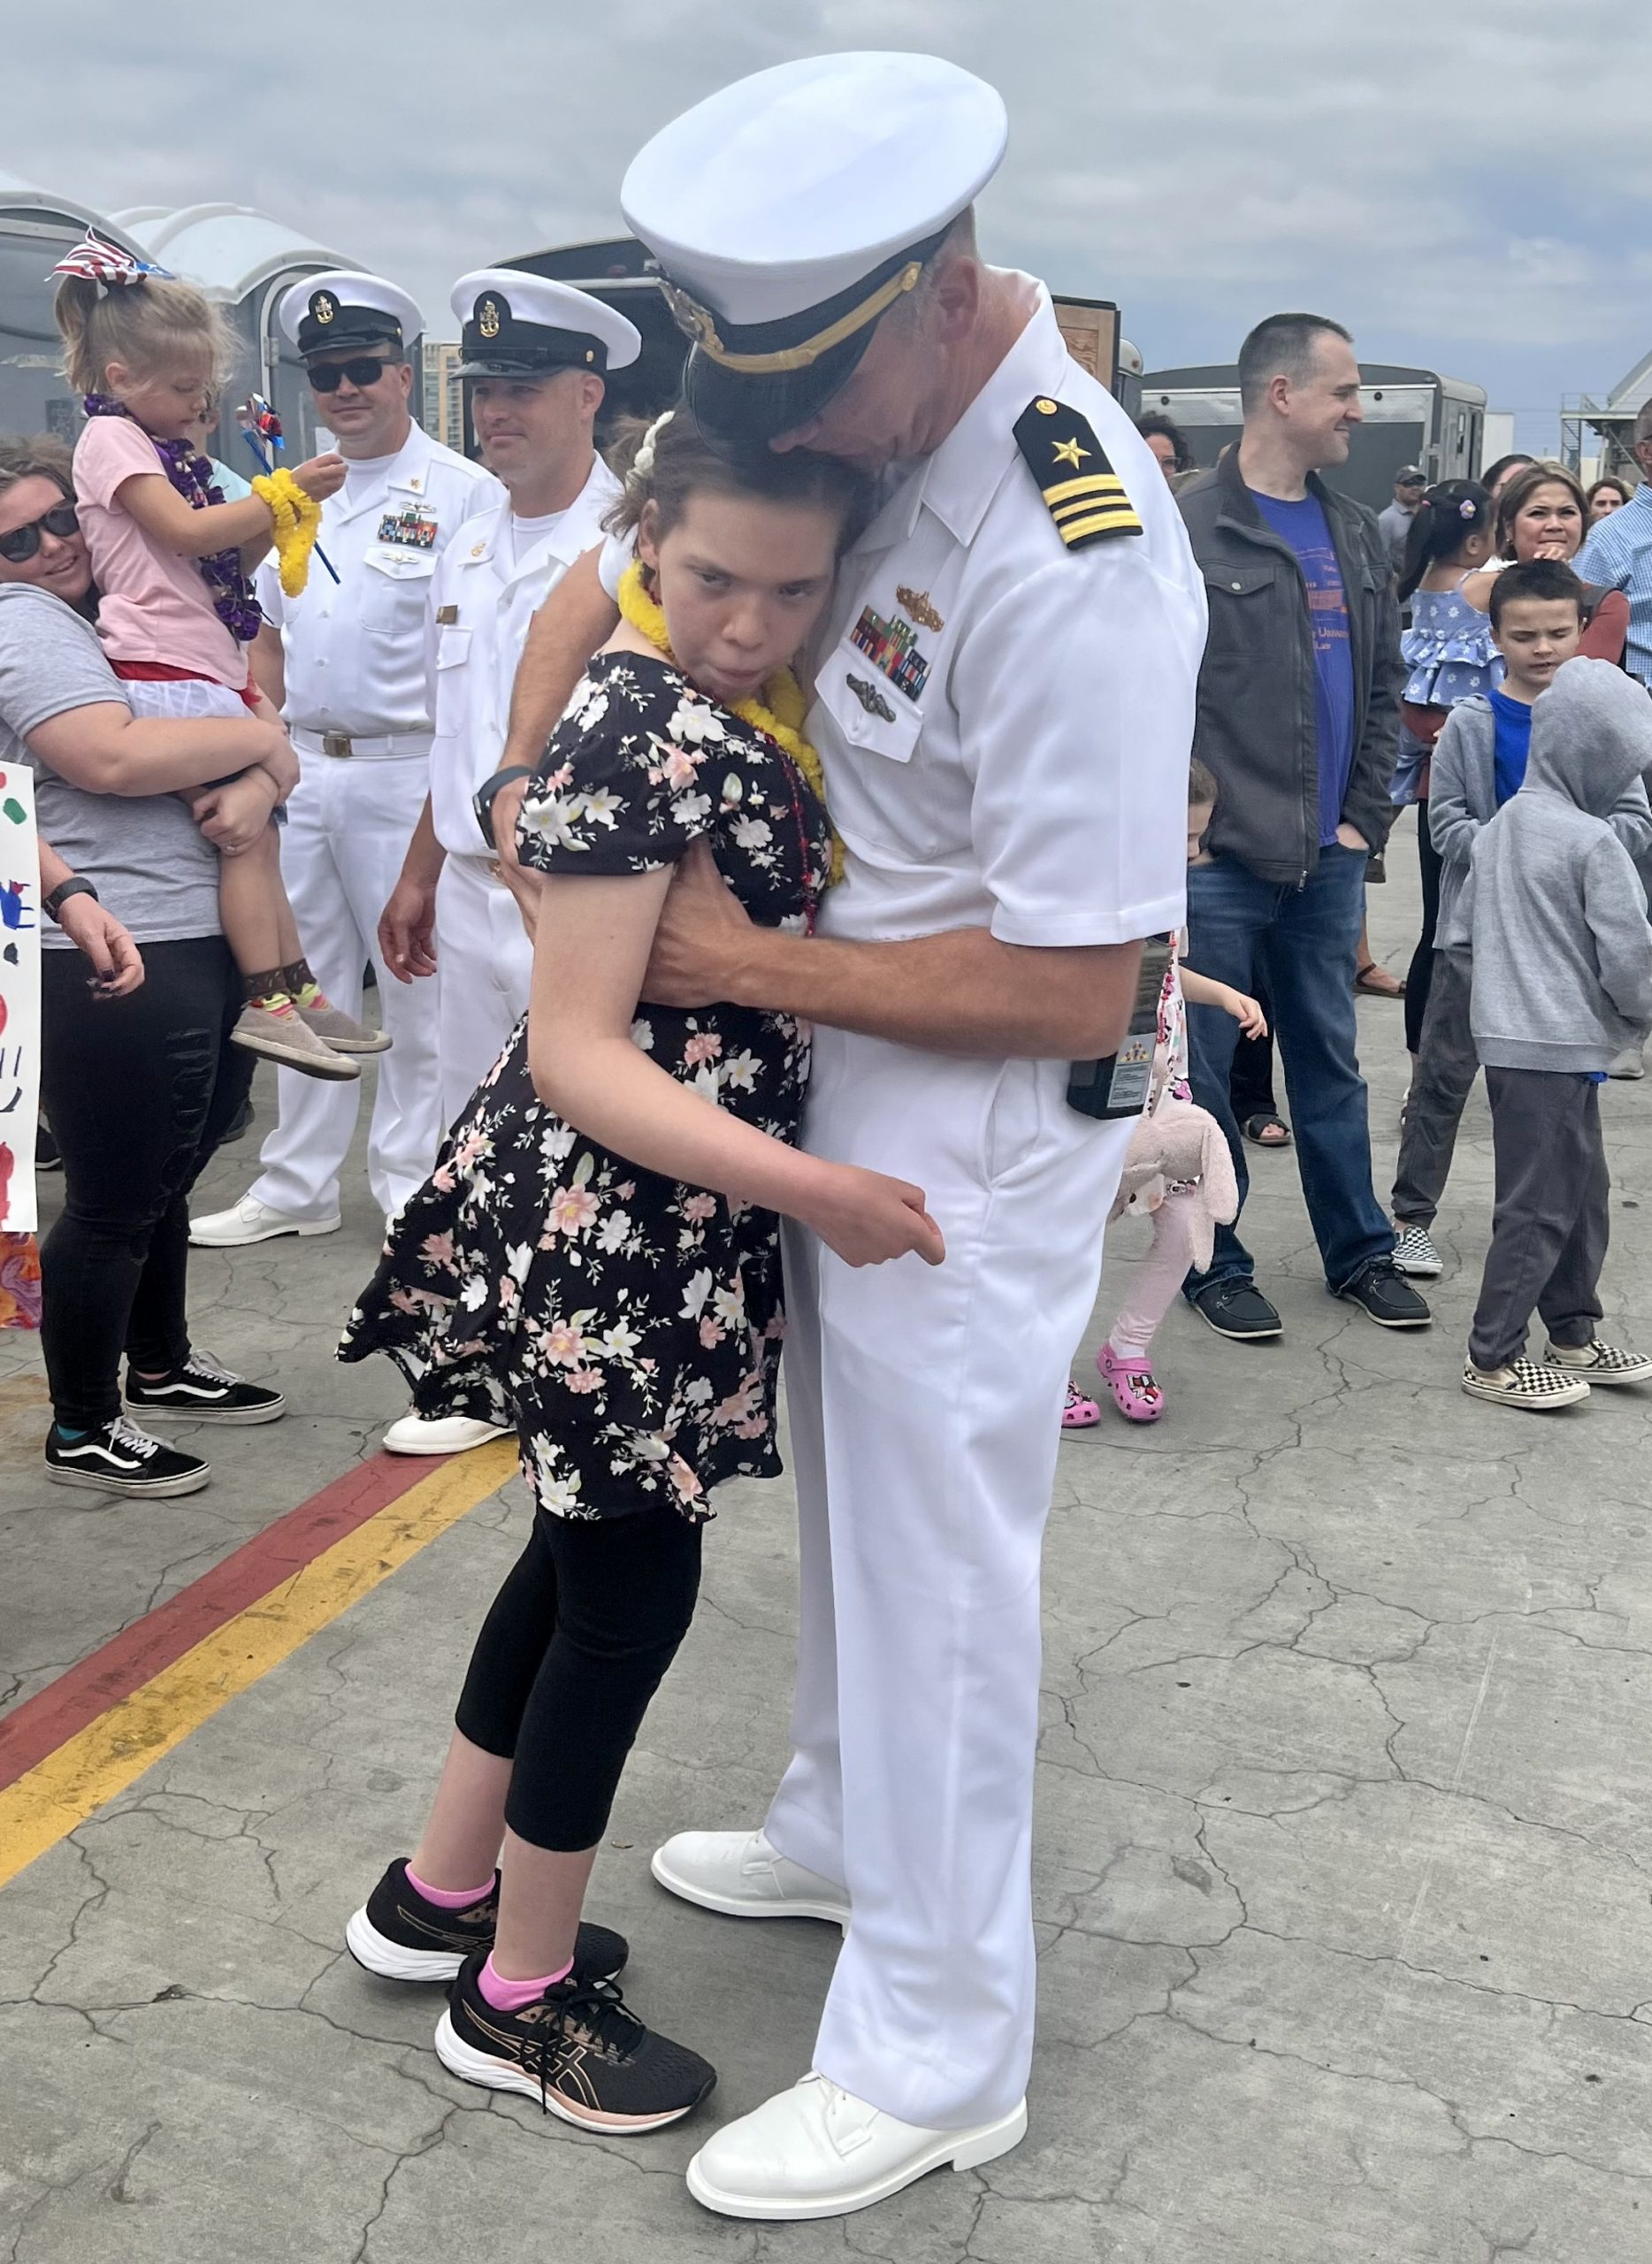 Welcome Home – USS CHARLESTON (LCS 18)